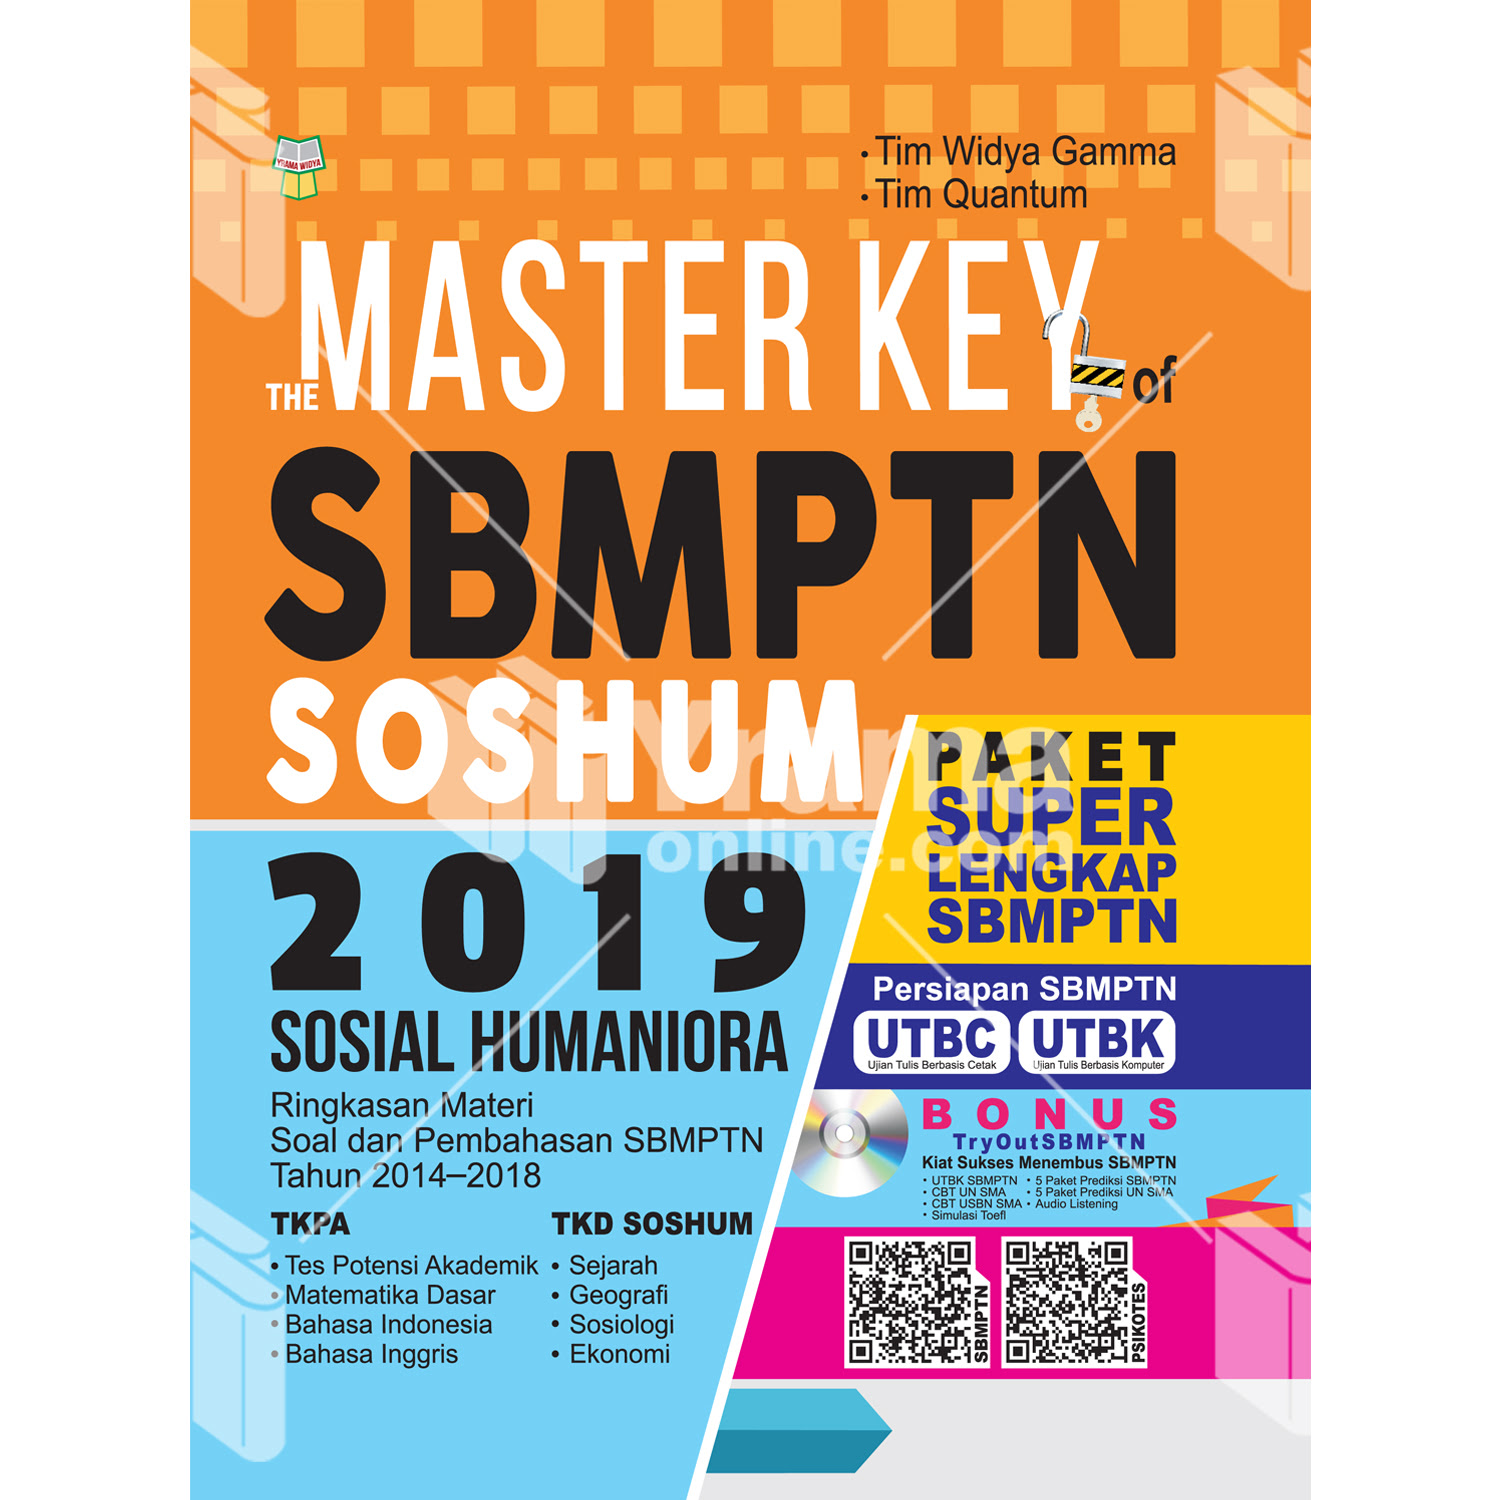 Buku The Master Key Sbmptn Soshum 2019